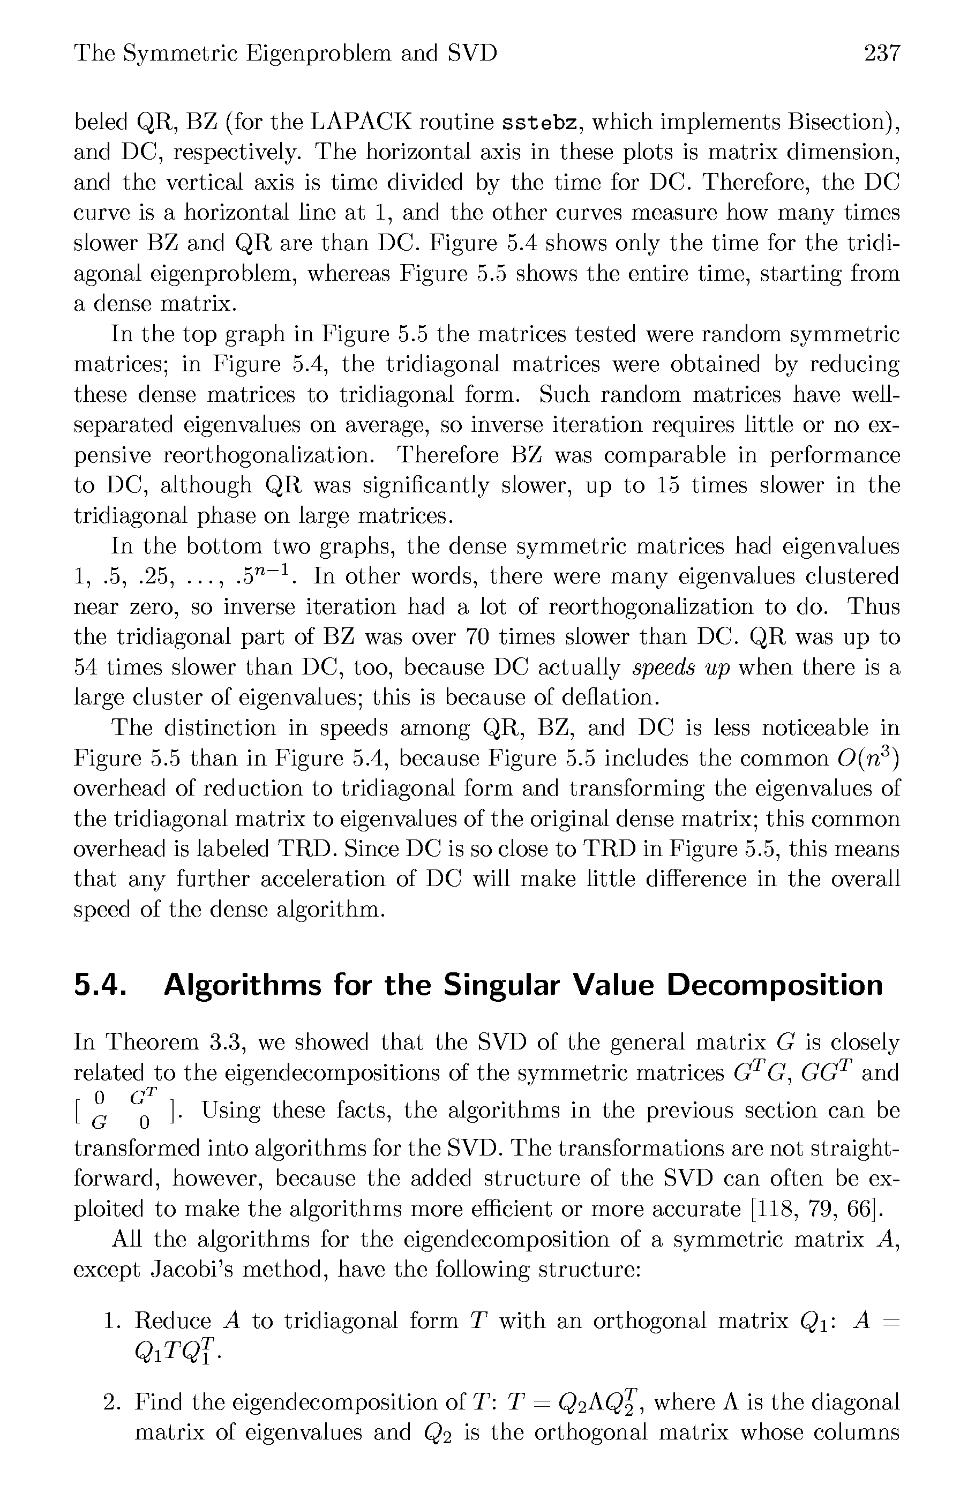 5.4 Algorithms for the Singular Value Decomposition